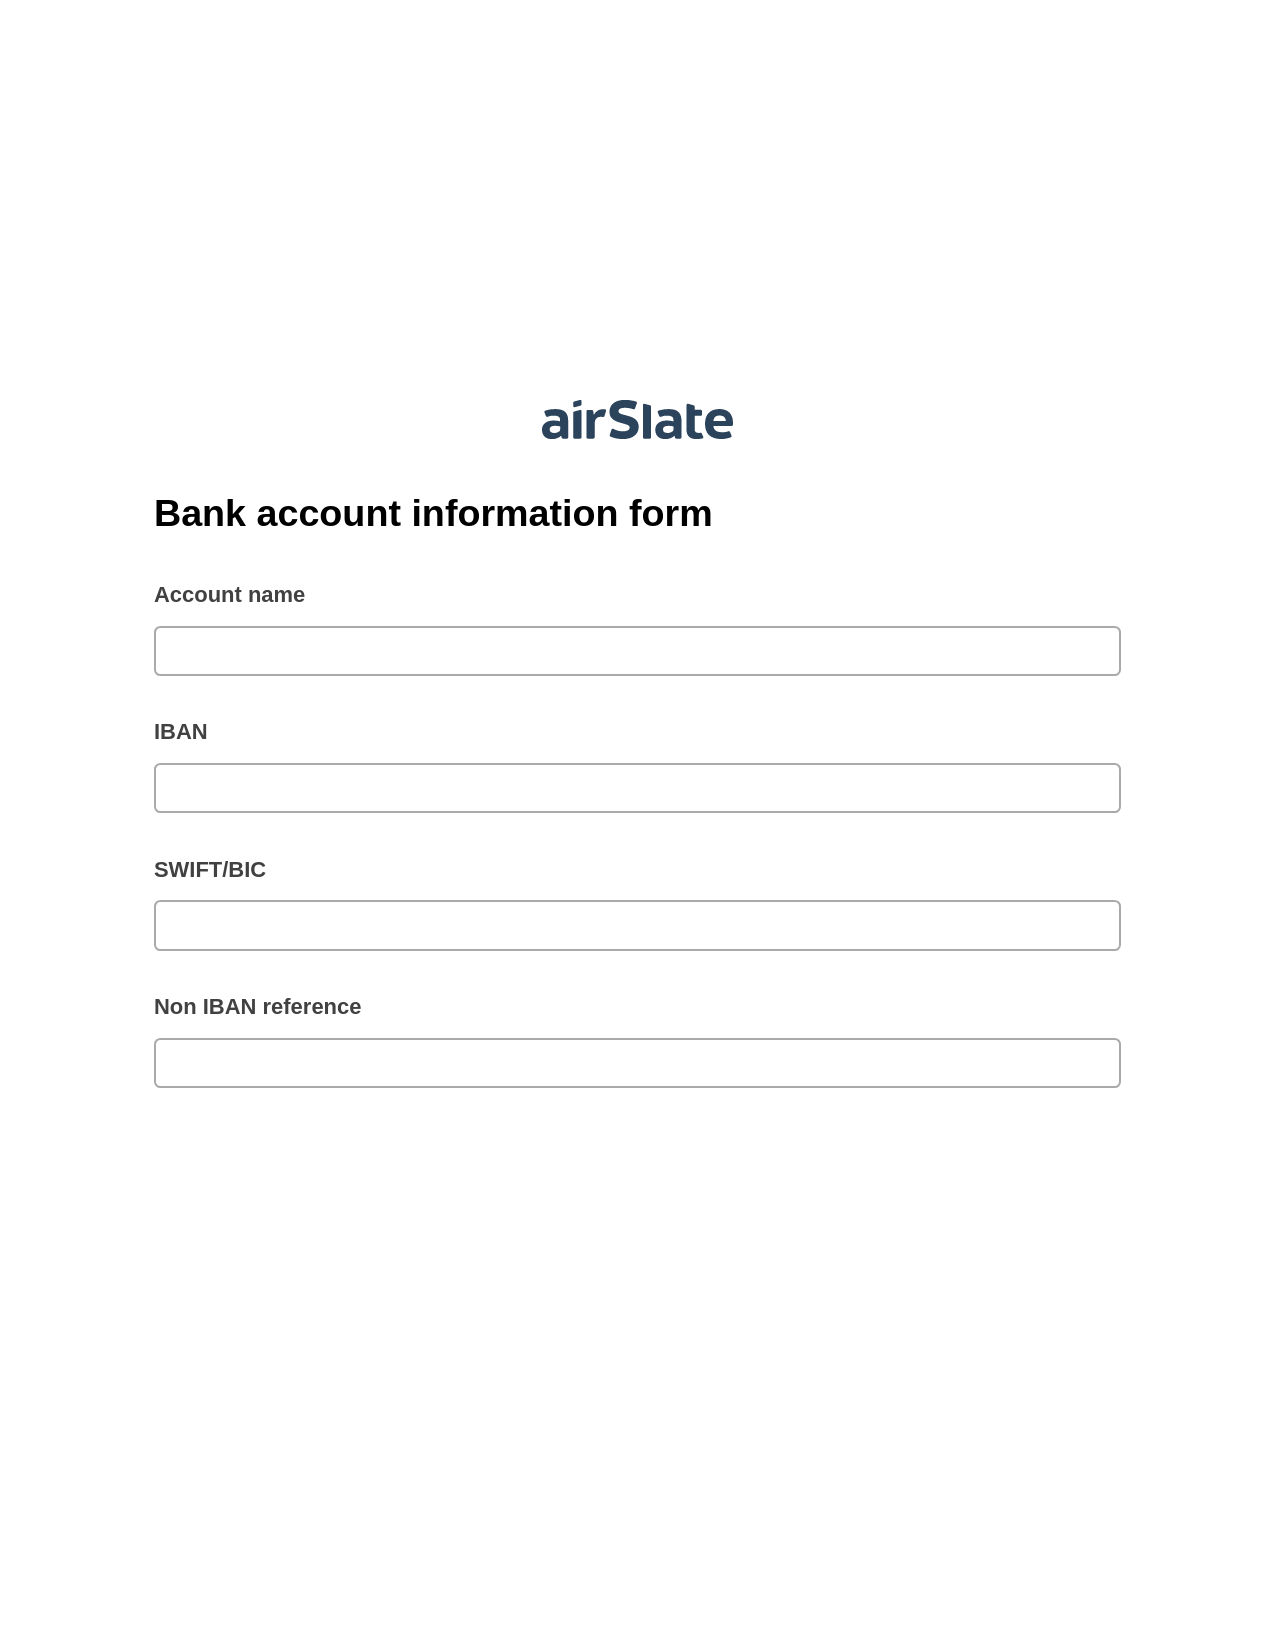 Multirole Bank account information form Pre-fill from CSV File Dropdown Options Bot, Google Calendar Bot, Slack Notification Postfinish Bot